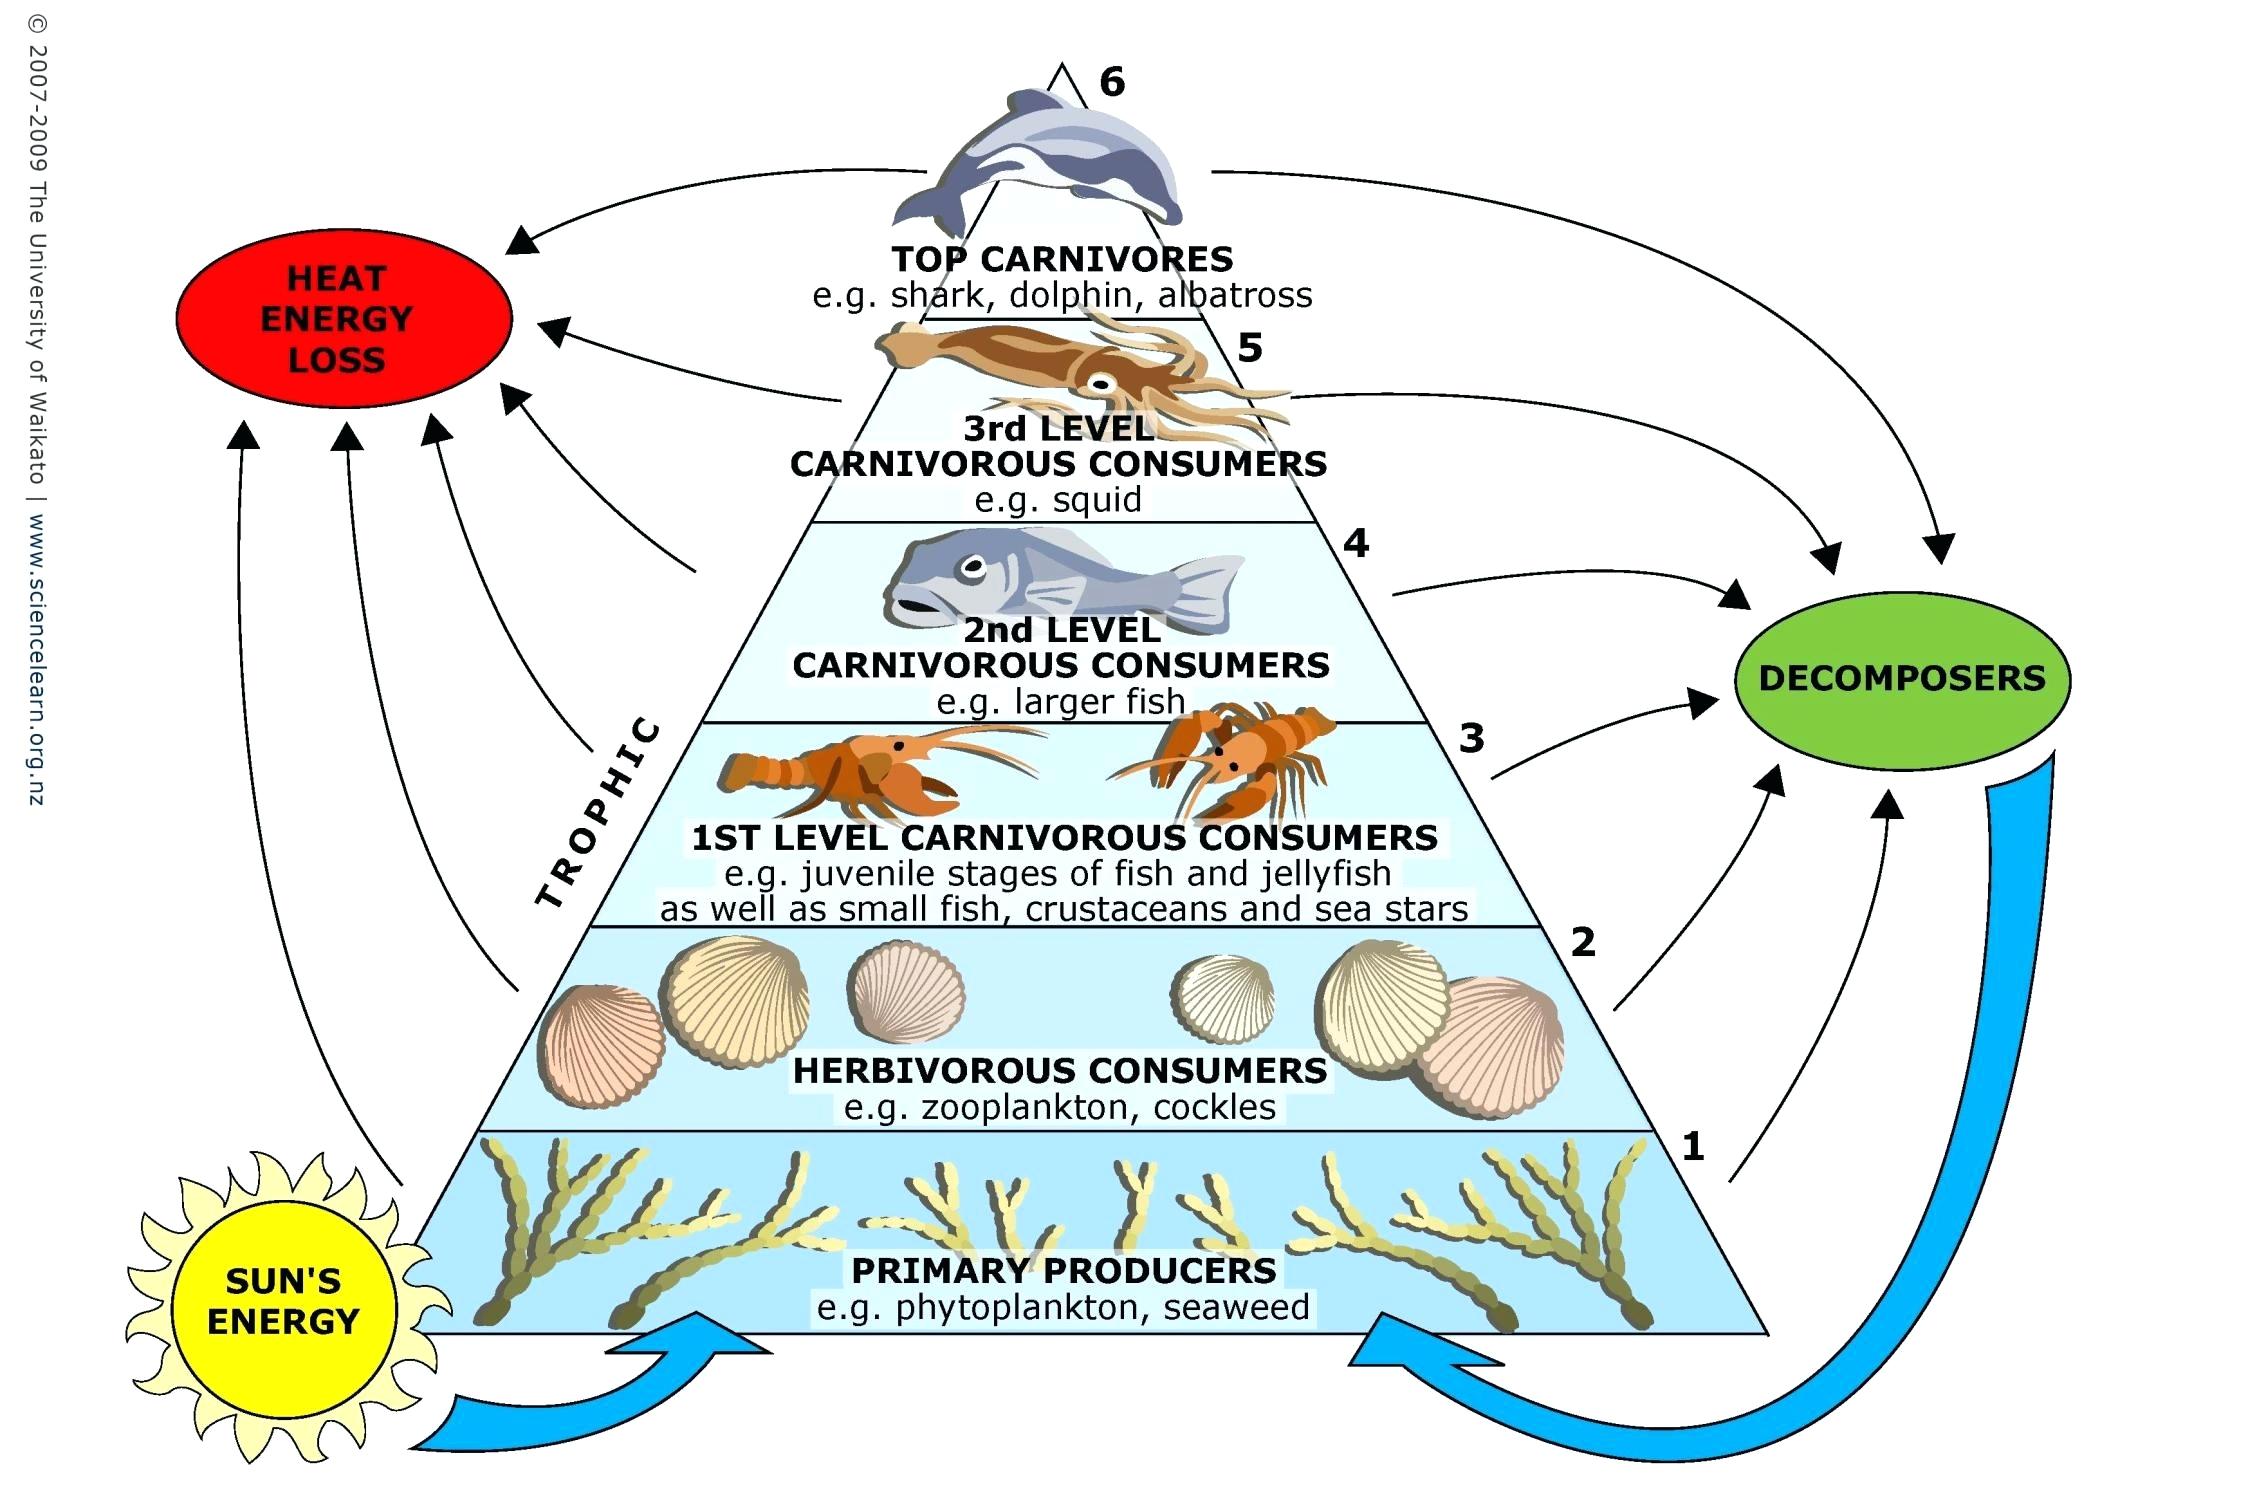 ocean-ecosystem-food-chain-diagram.jpg